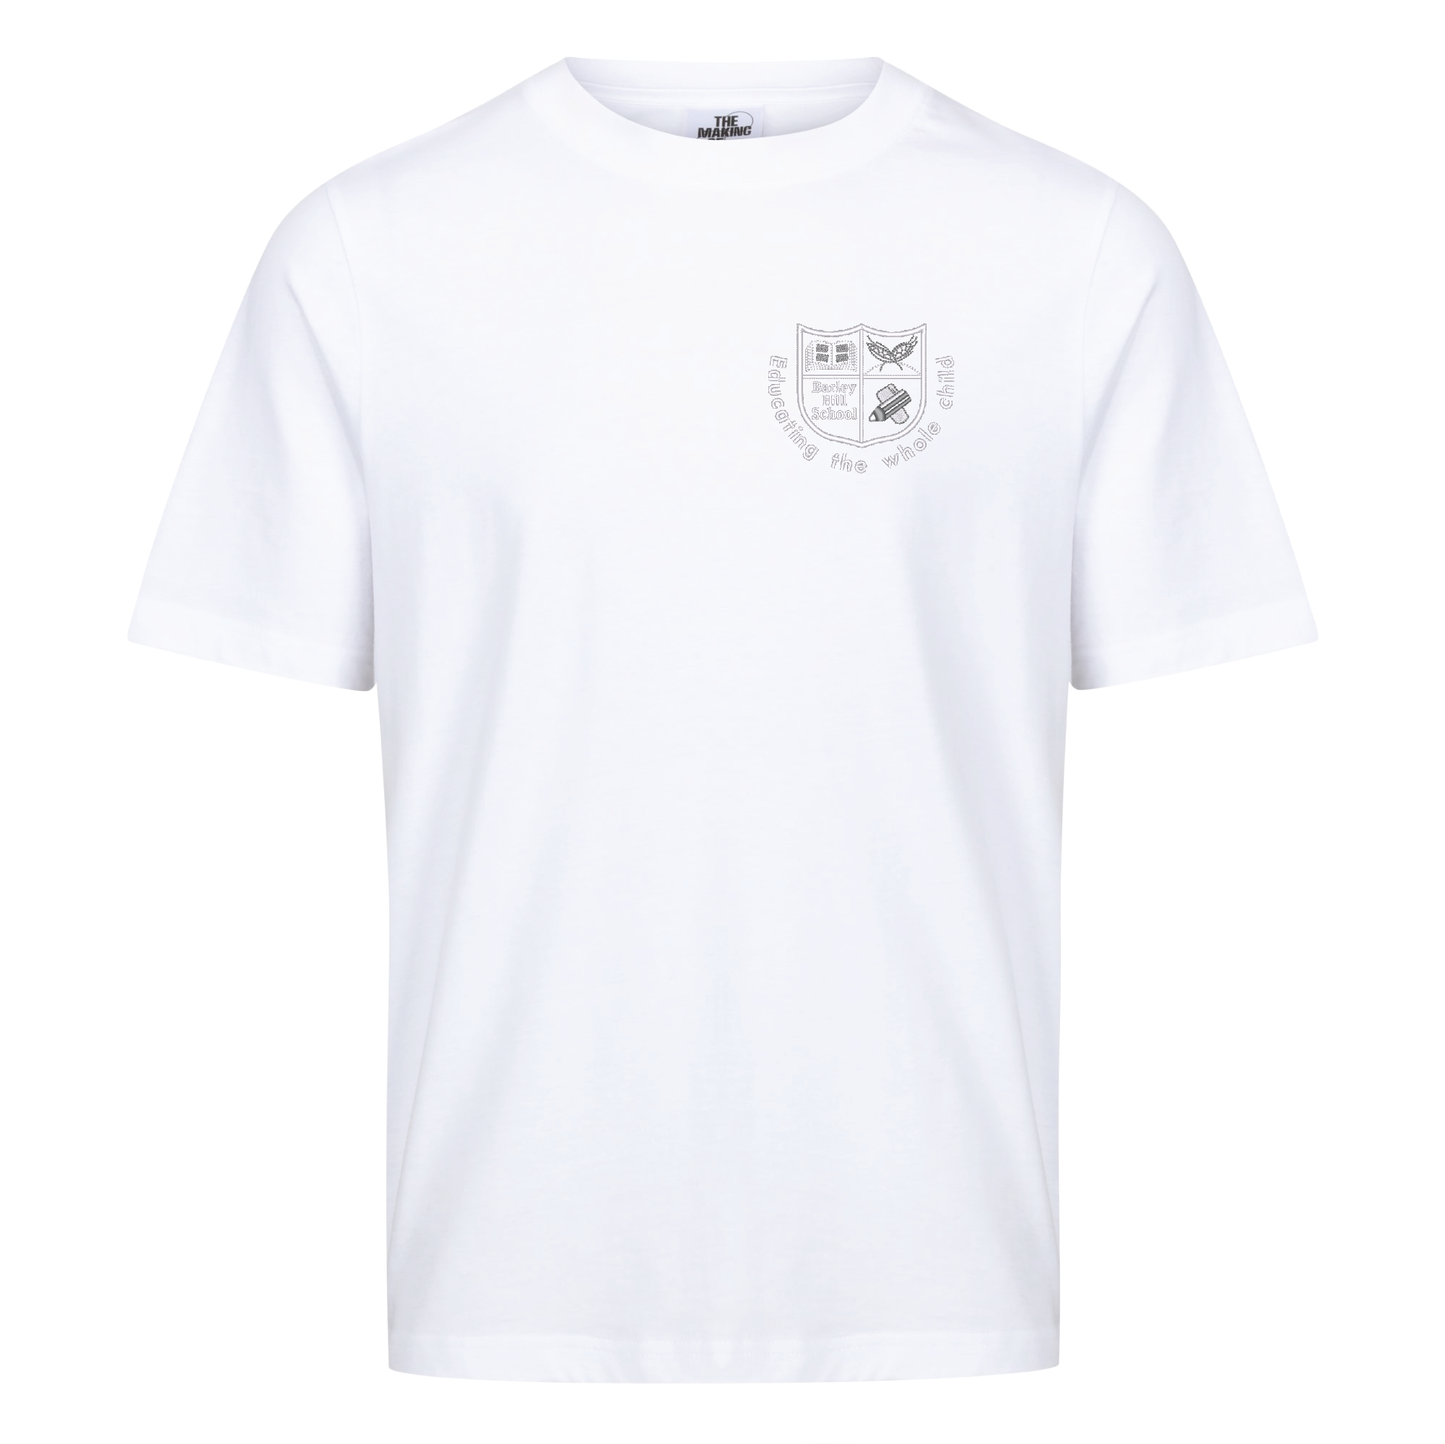 Barley Hill Primary School - Unisex Cotton T-Shirt